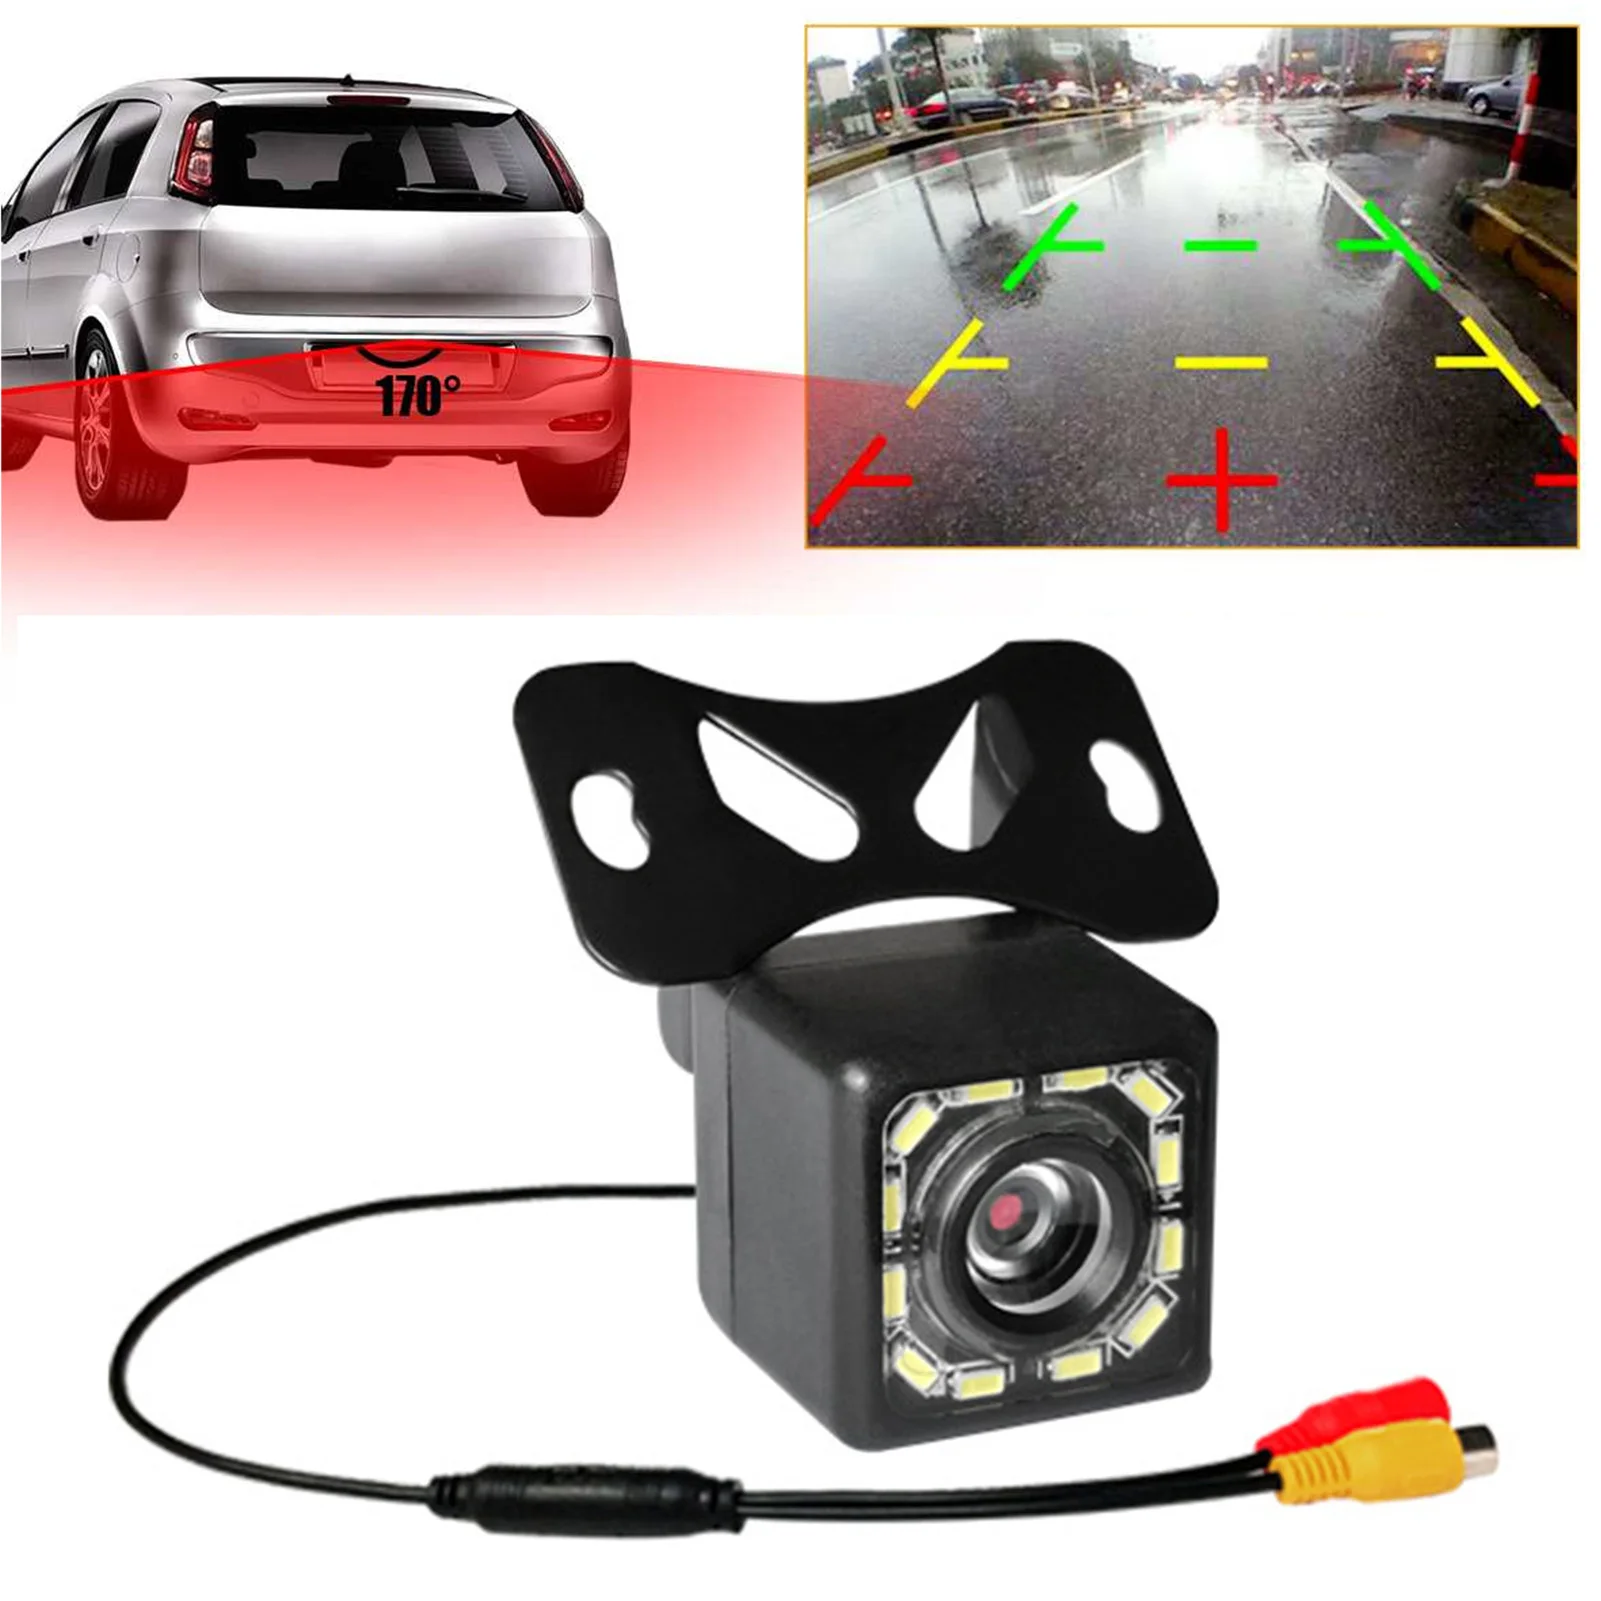 https://ae01.alicdn.com/kf/S56d0417ce8f44893923c8a89867b93f71/HD-Car-Backup-Camera-LED-Night-Vision-Reversing-Camera-170-Degree-Wide-View-Angle-Waterproof-Car.jpg